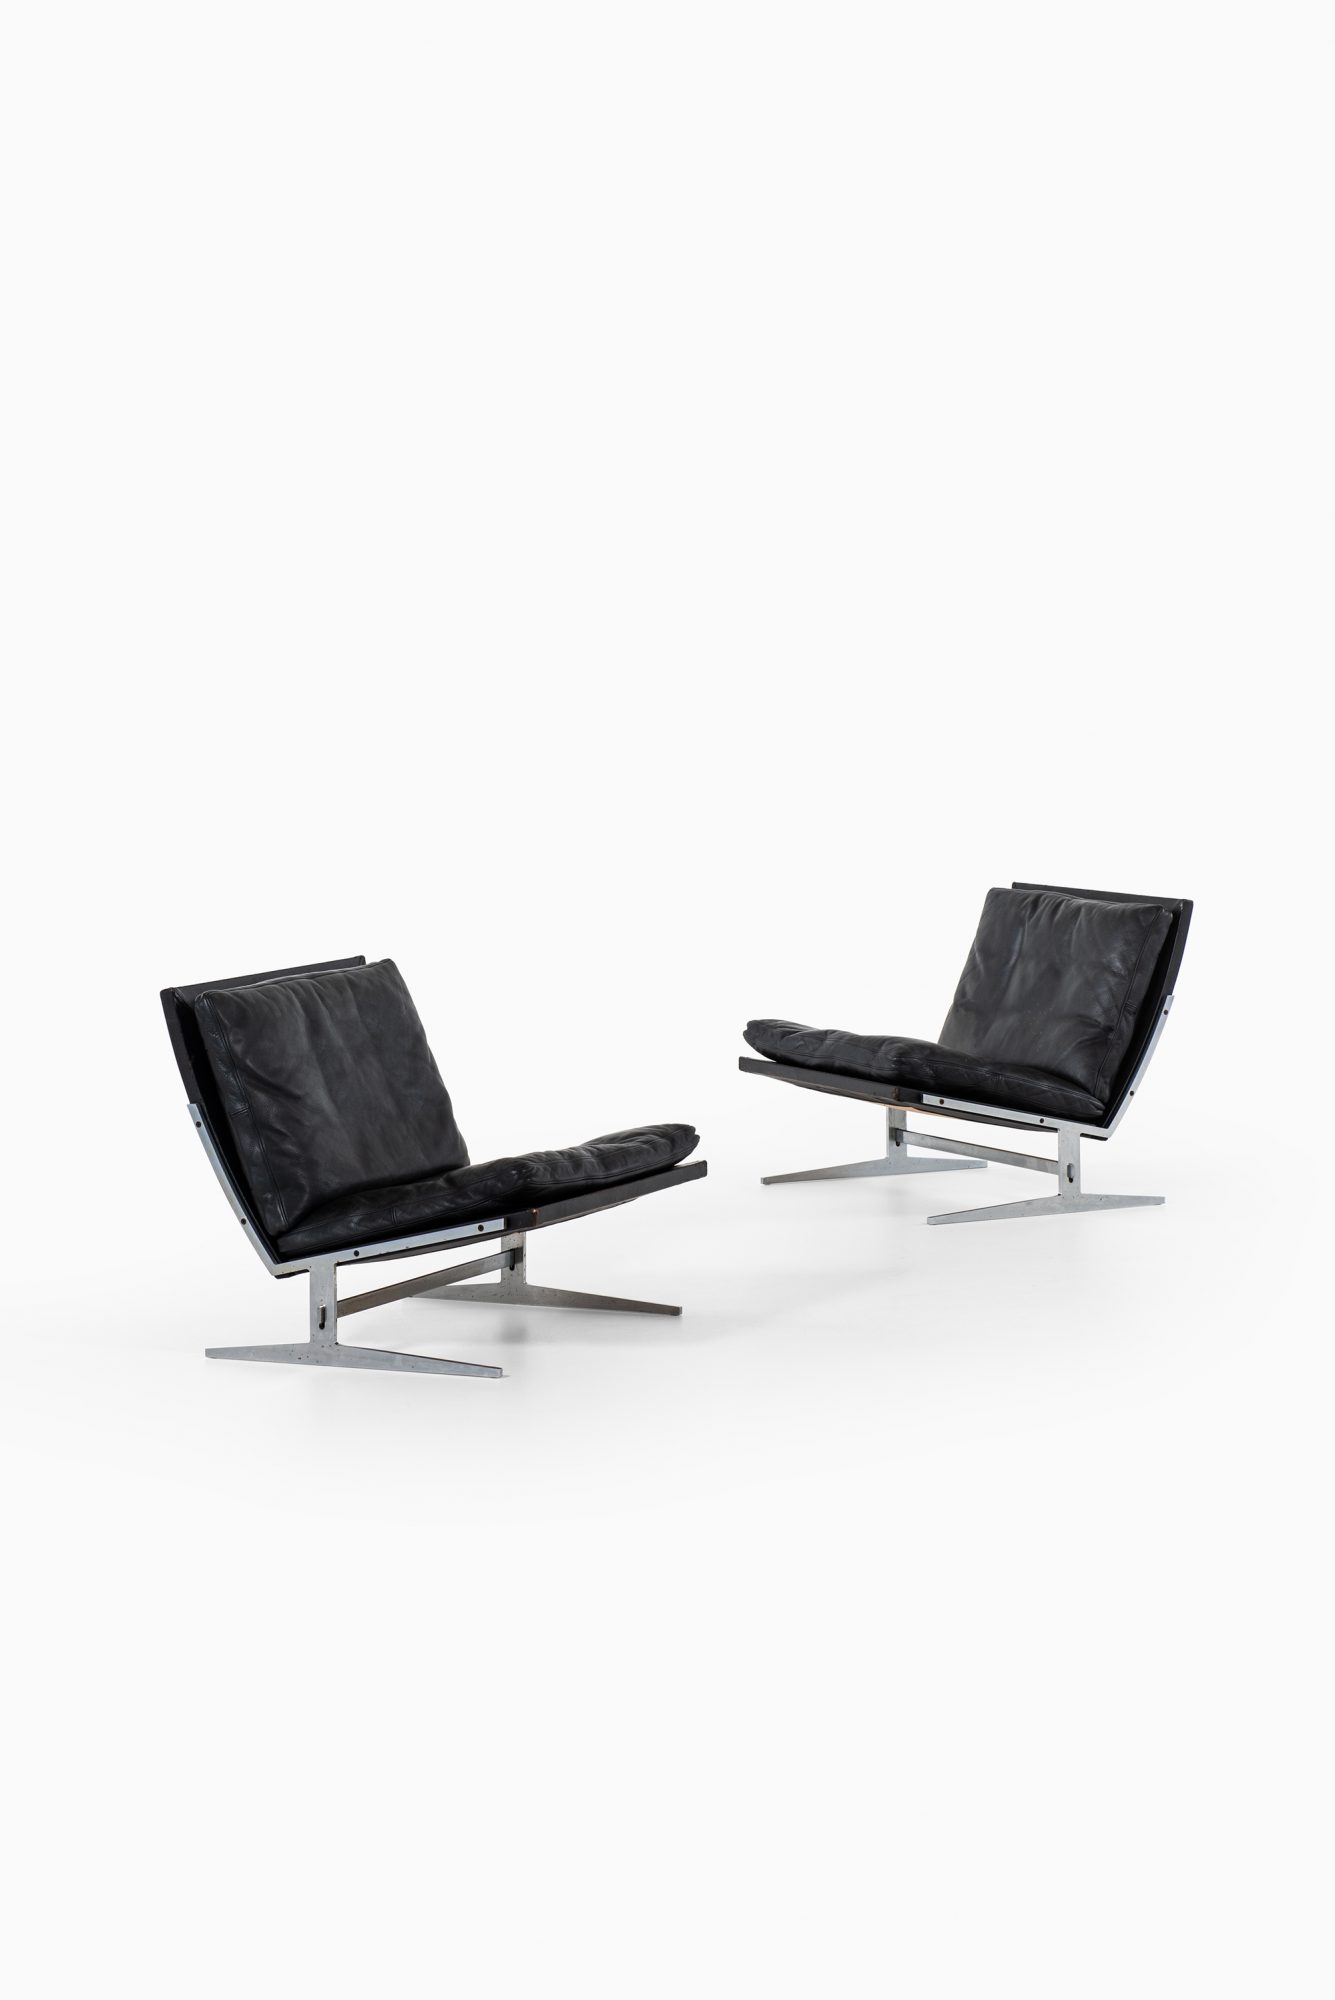 Jørgen Kastholm & Preben Fabricius easy chairs at Studio Schalling